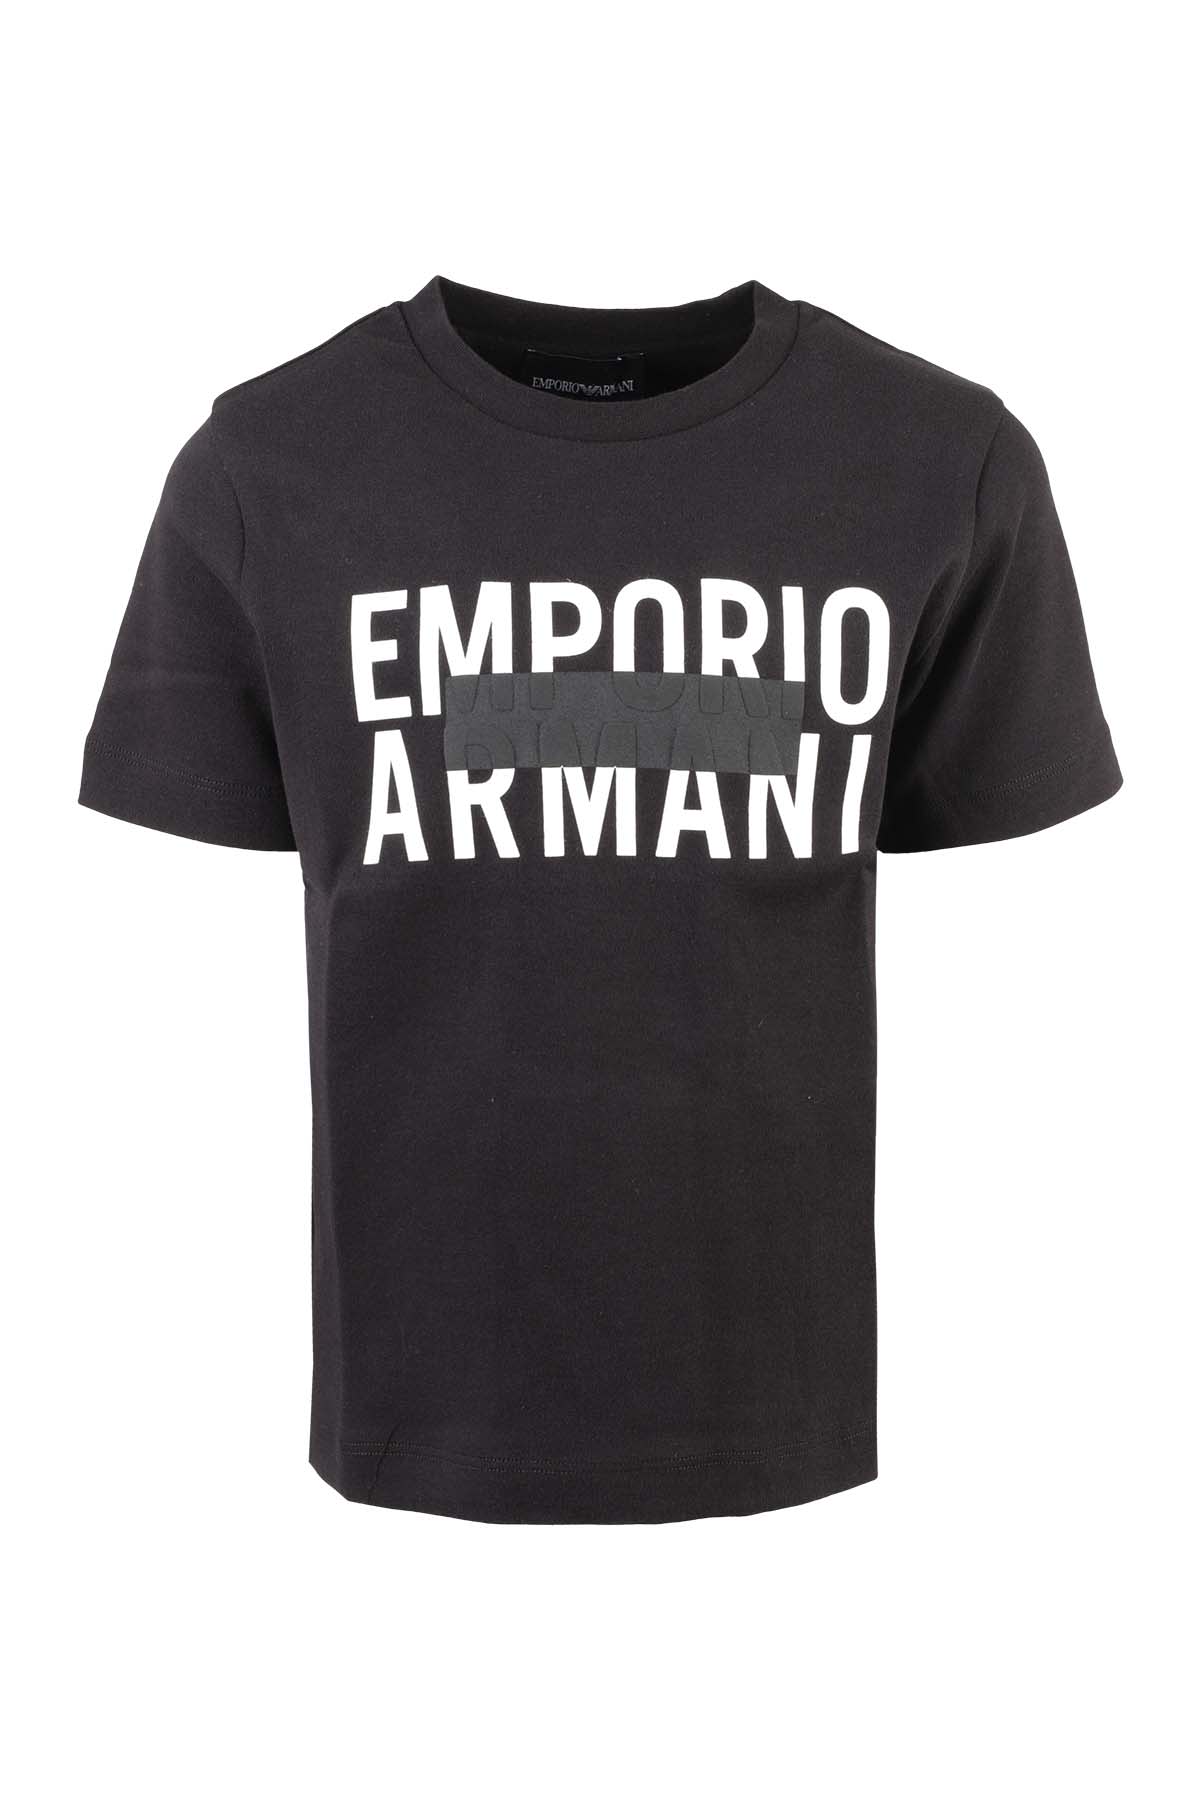 EMPORIO ARMANI T-SHIRT,3K4TJH 4J4EZ 0999 NERO